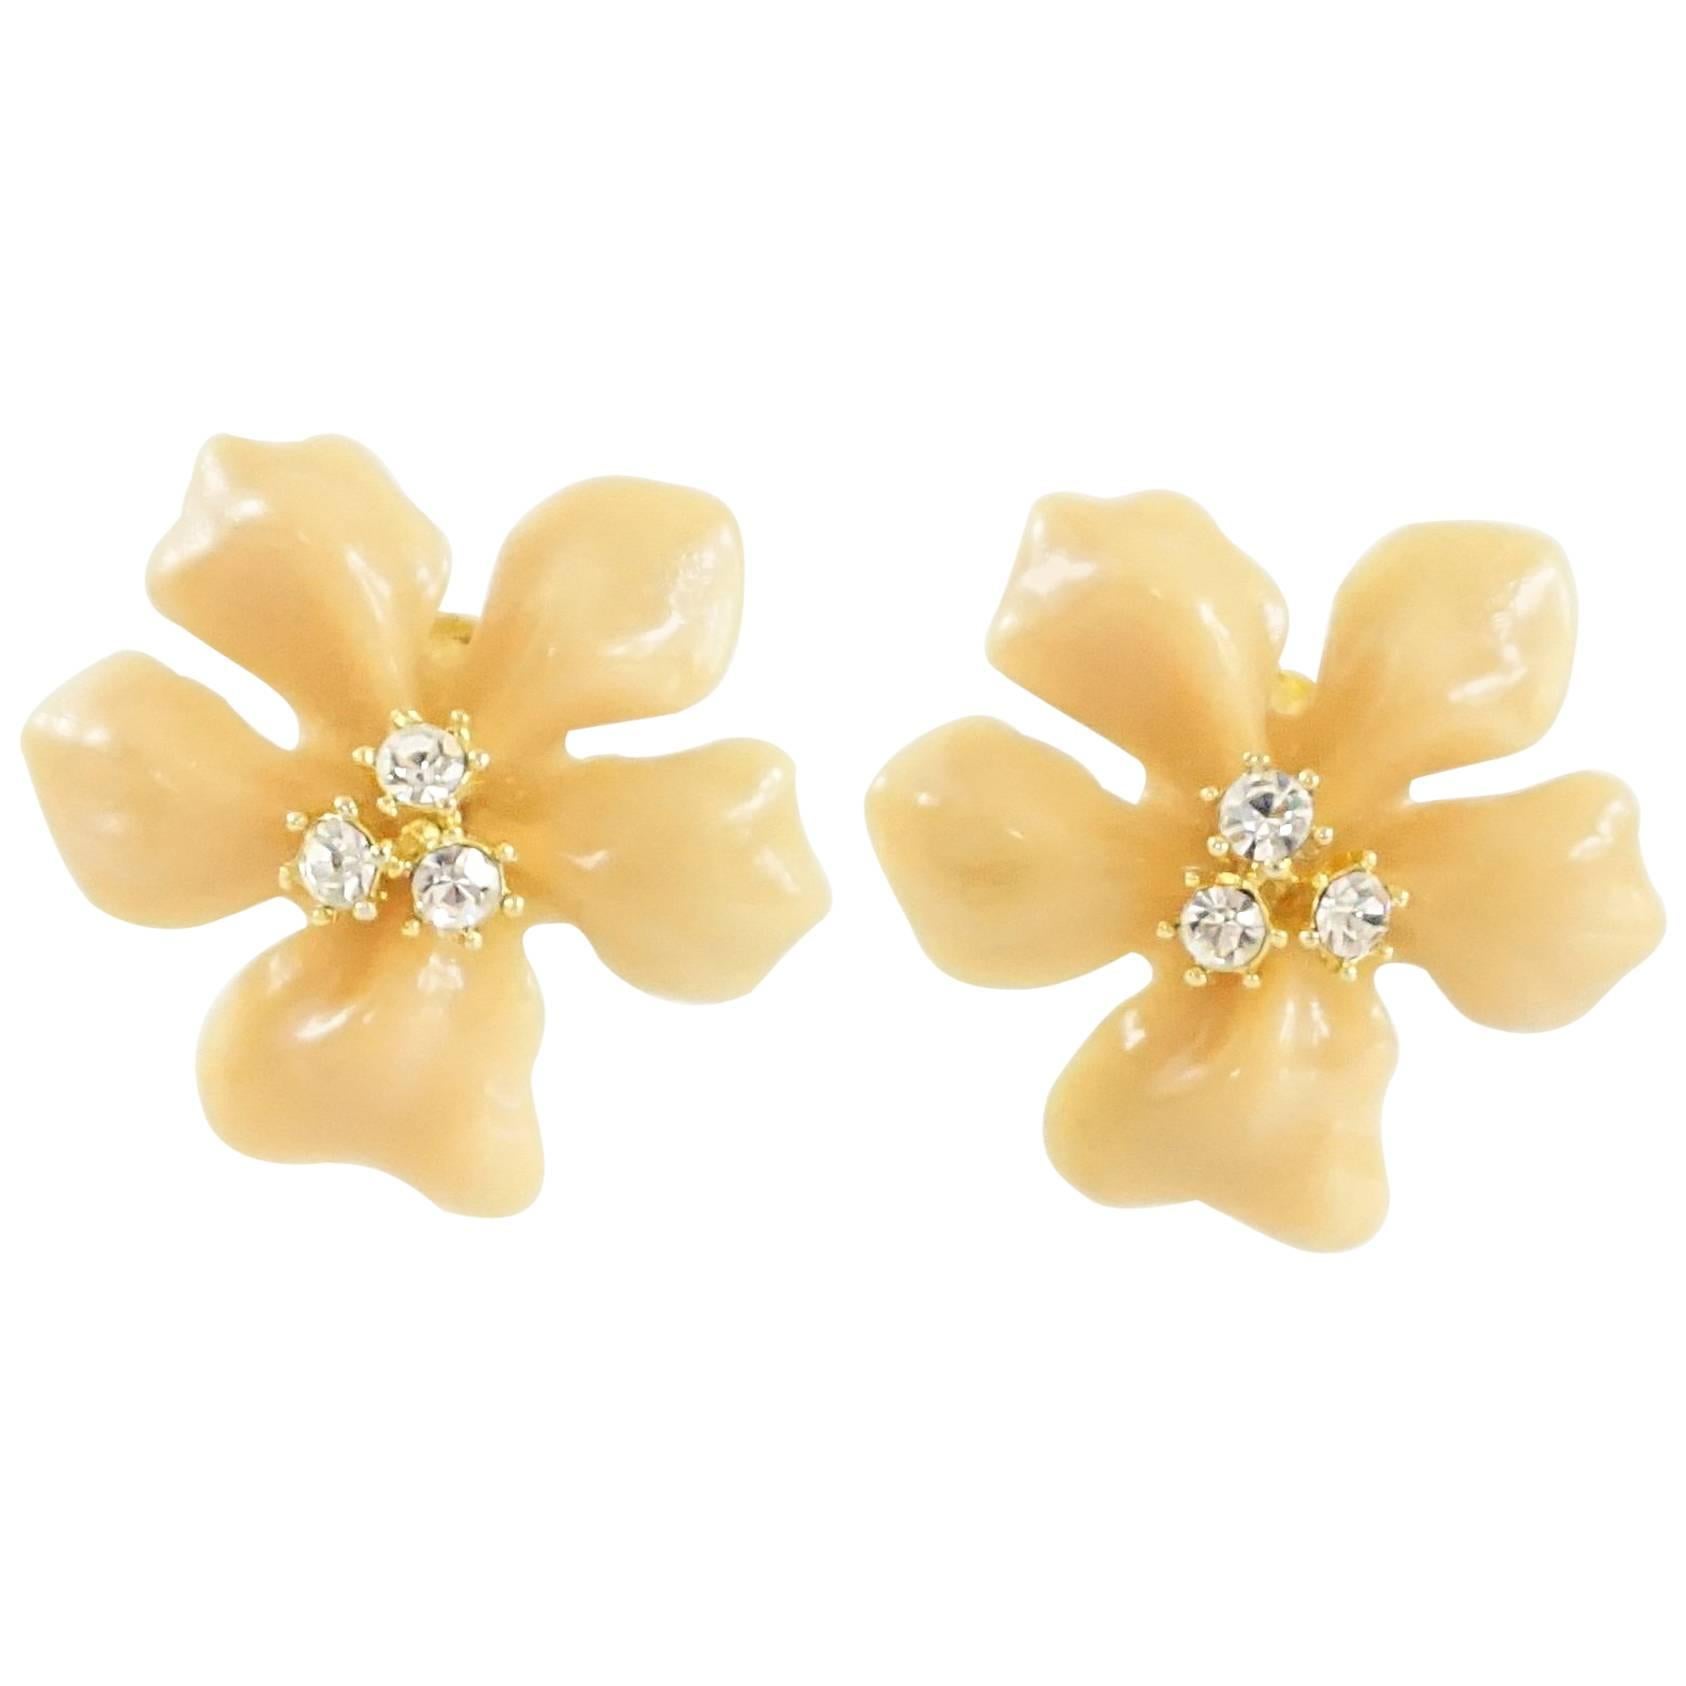 Kenneth Jay Lane Orange Flower Earrings with Rhinestones